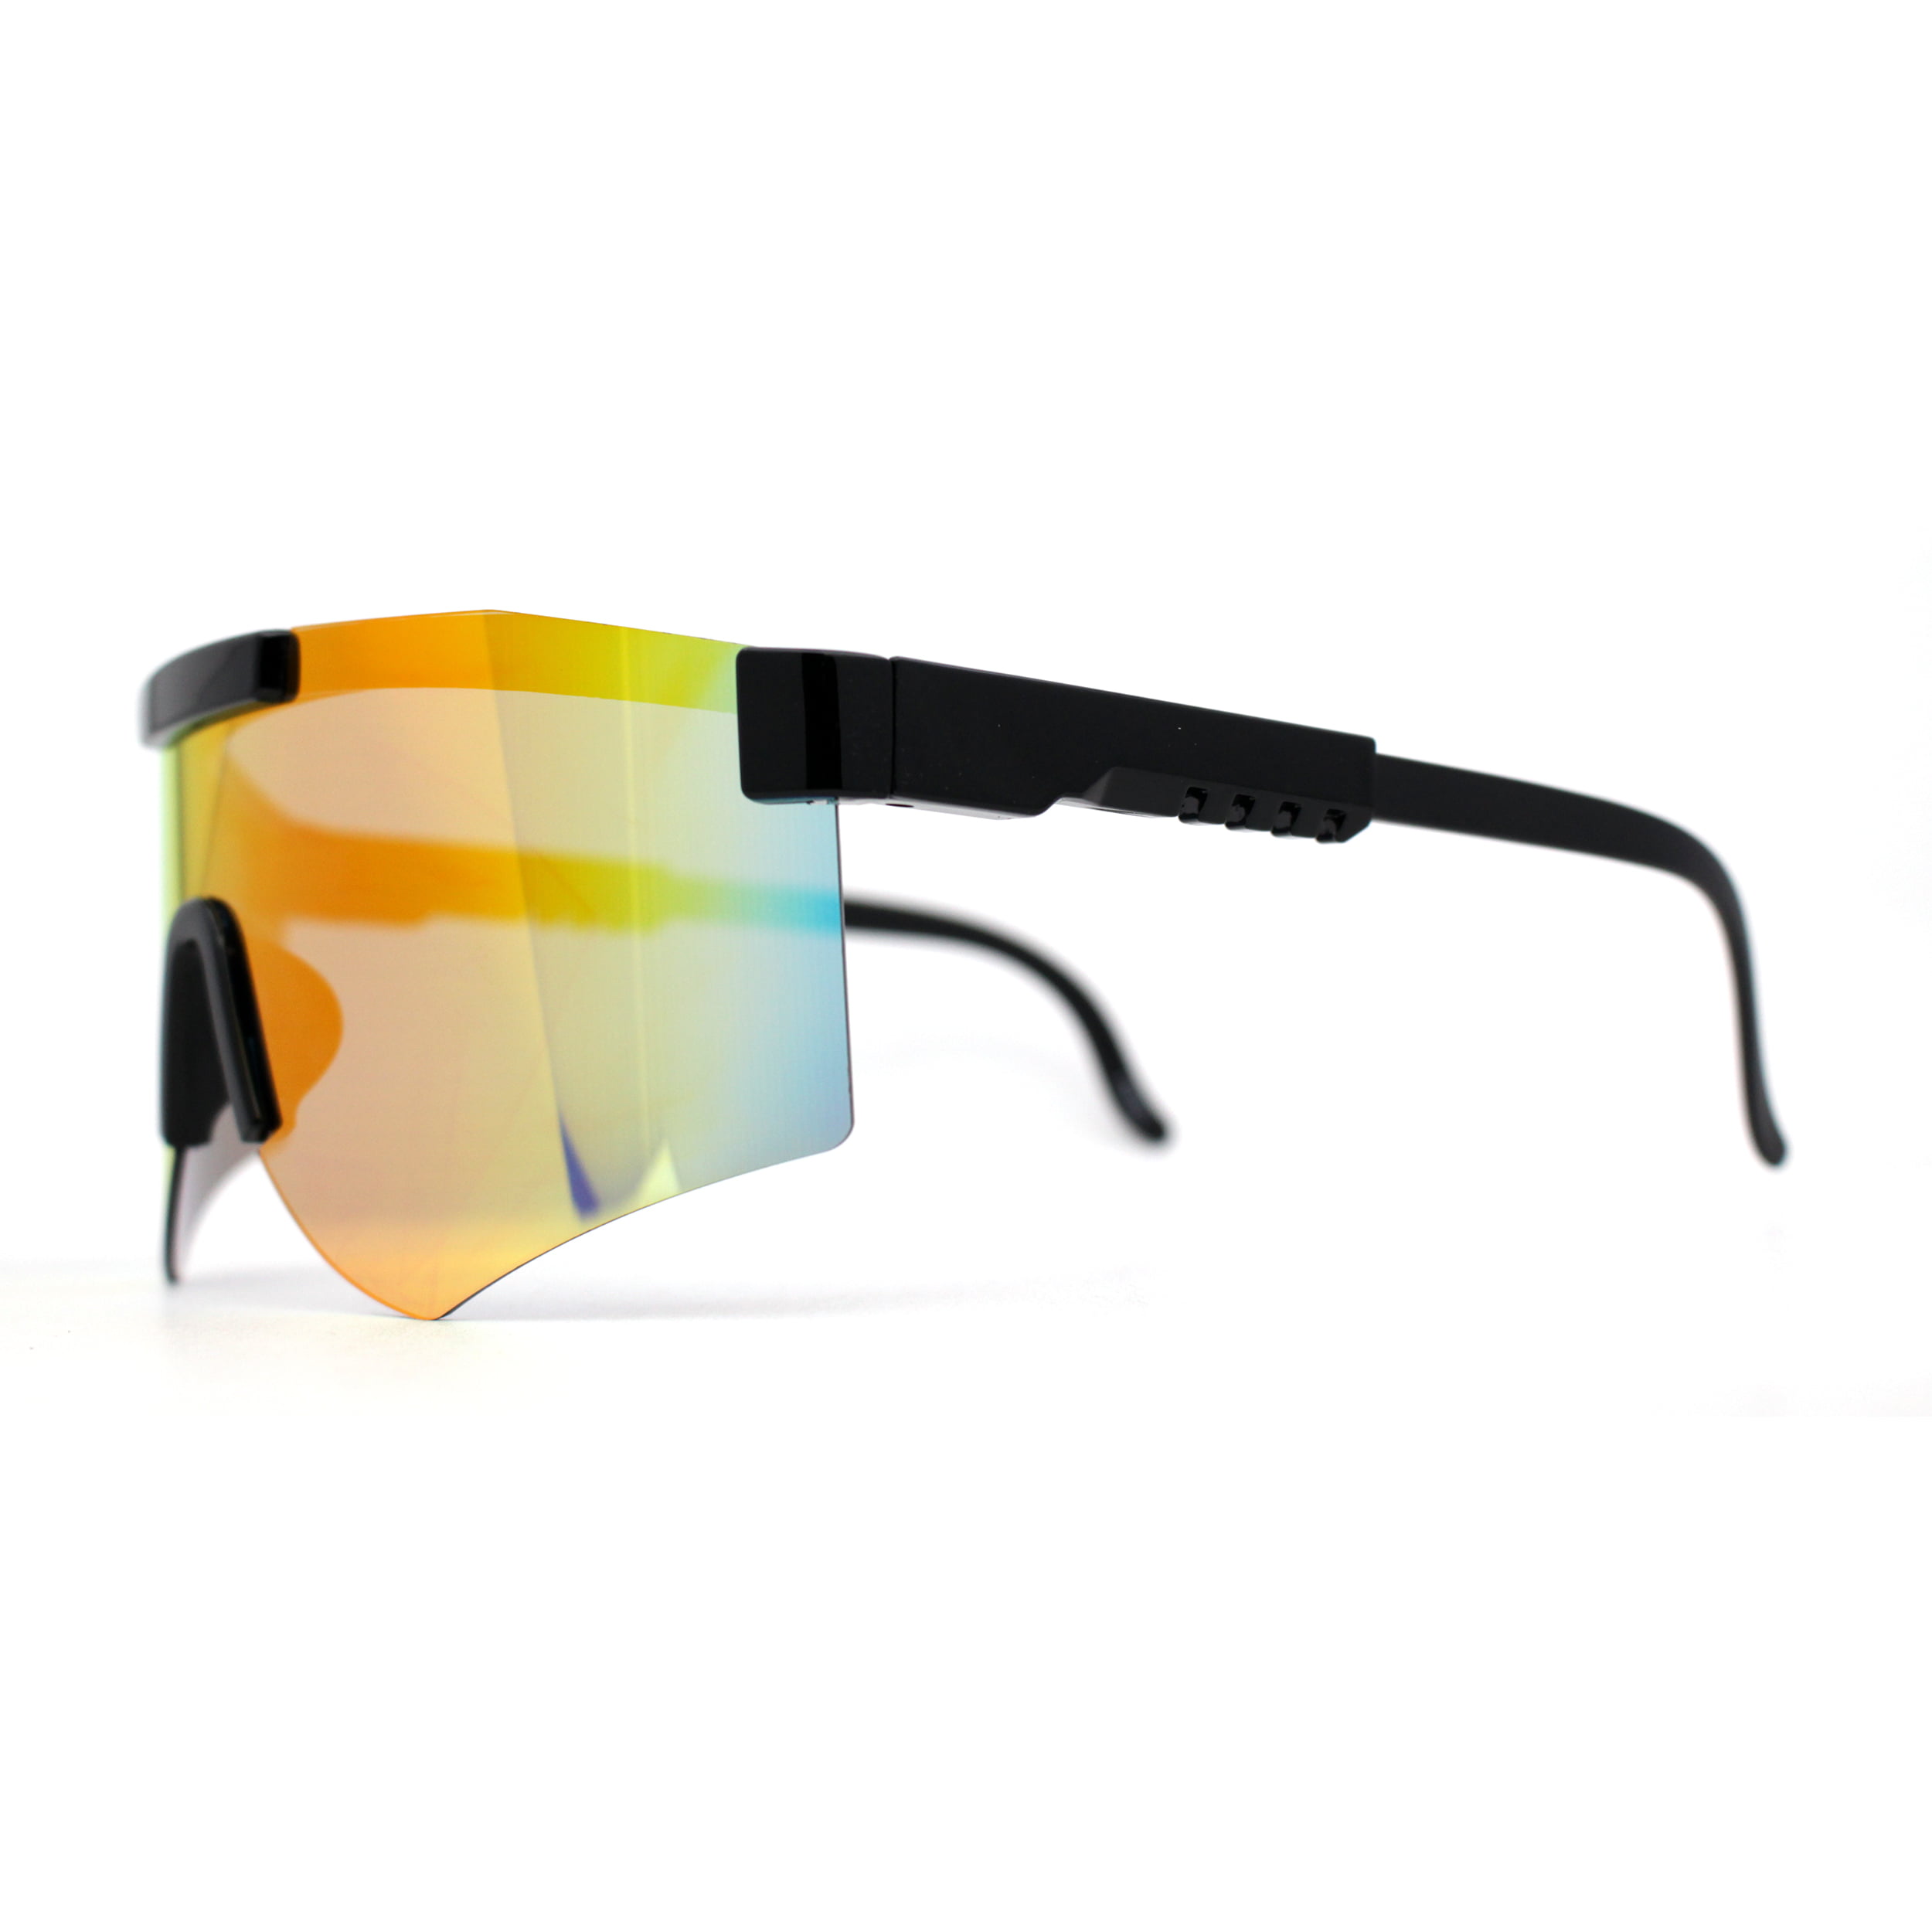 Adjustable Arms Black Mirror Monoblock All Sunglasses Rainbow Shield Cyberpunk Futuristic